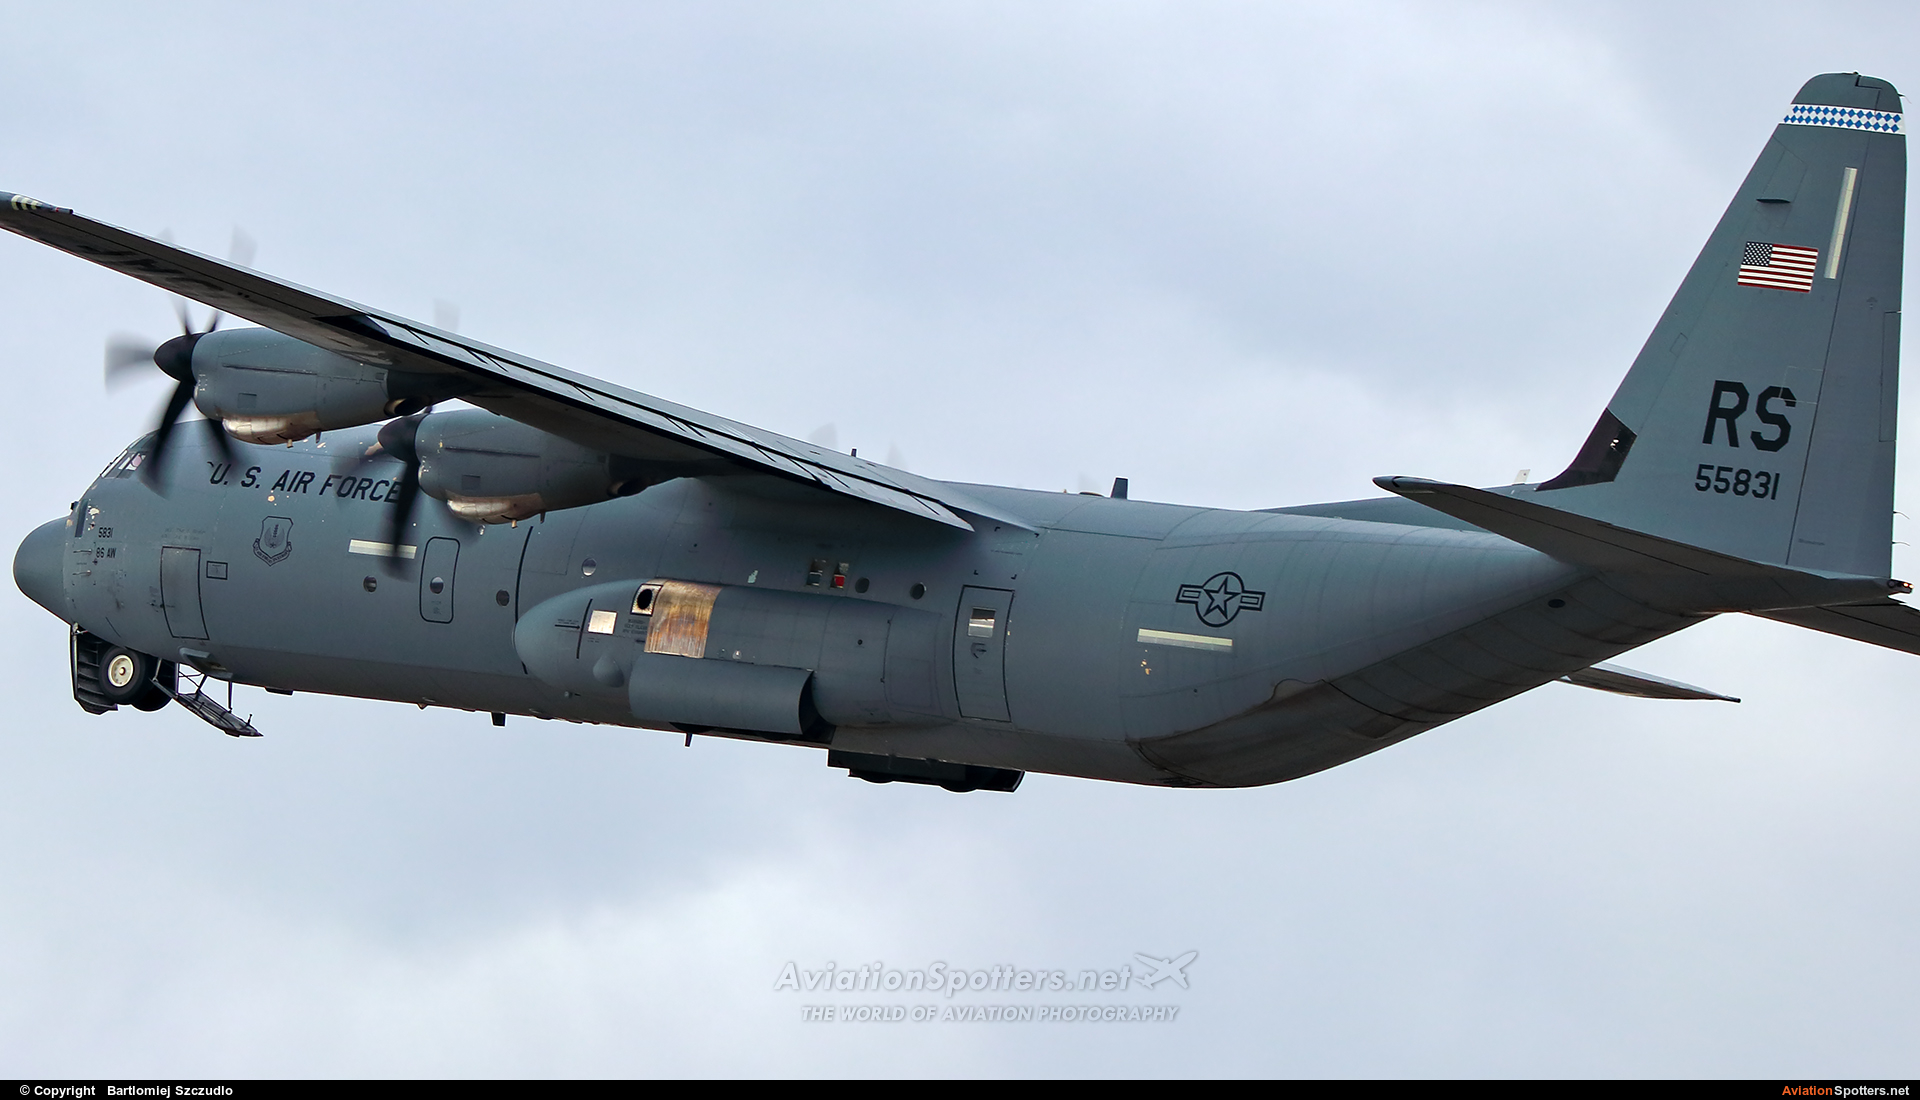   C-130J Hercules  (15-5831) By Bartlomiej Szczudlo  (BartekSzczudlo)